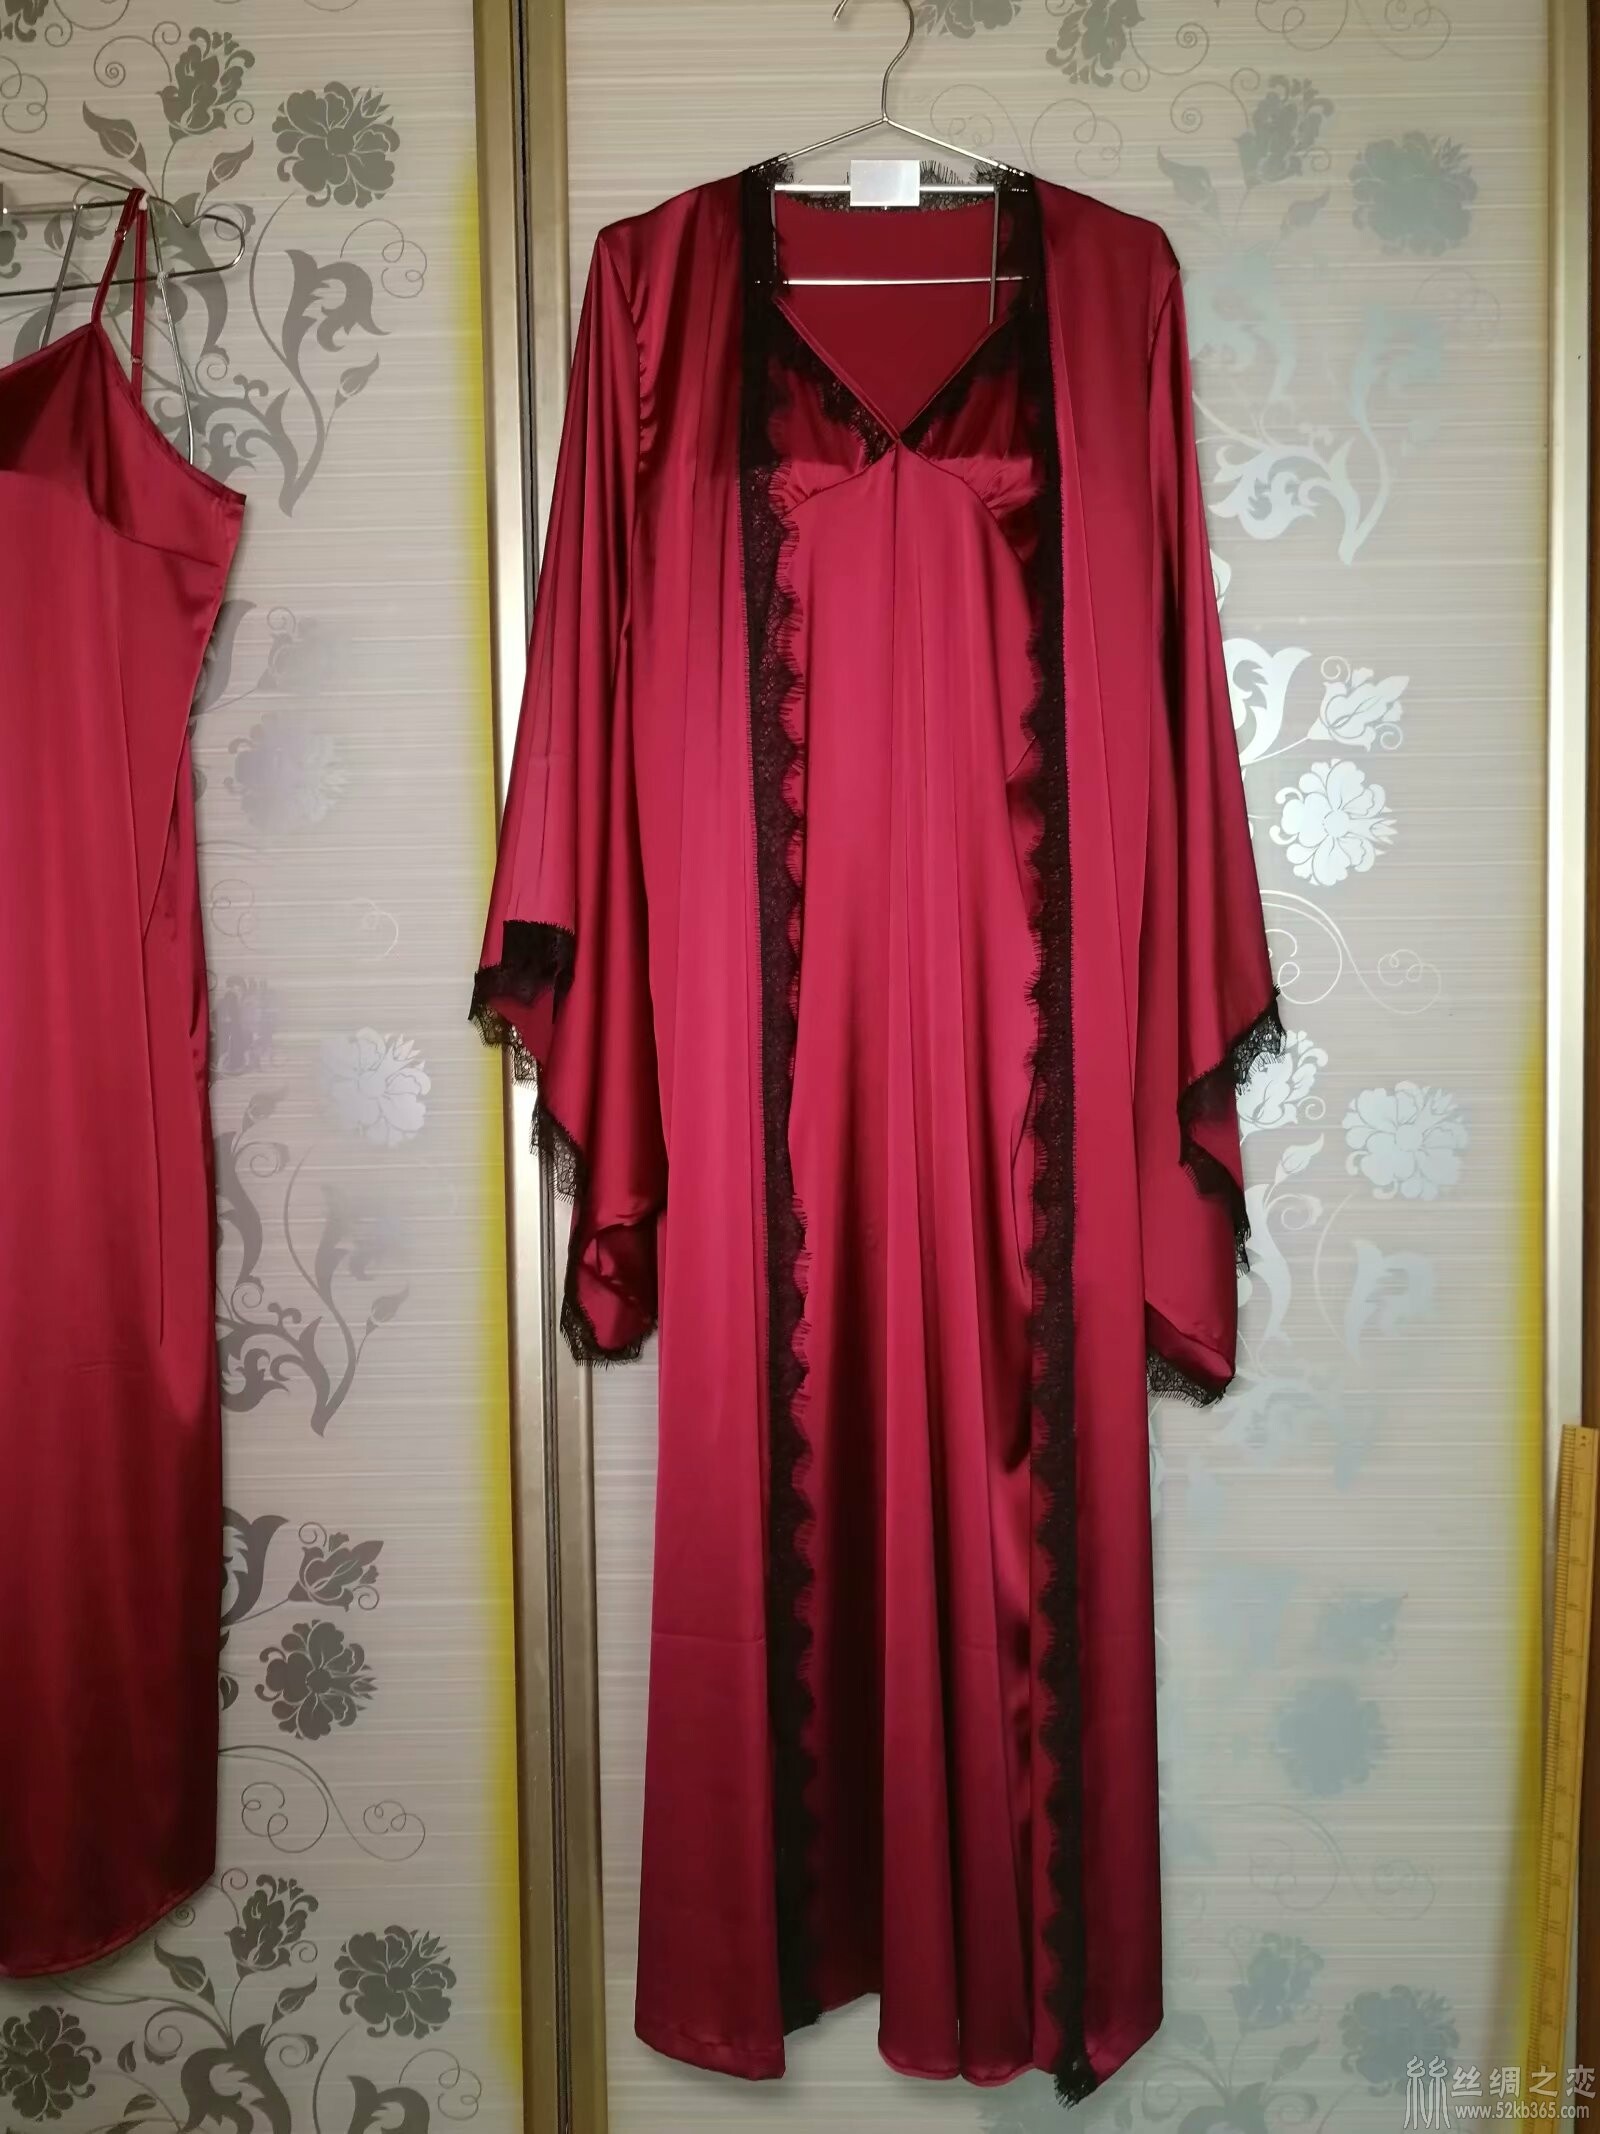 52kb365 高端订制丝绸睡衣玫红两件套 Z.jpg  丝绸物品爱好者 082723oyjxsnfyfrzudmud